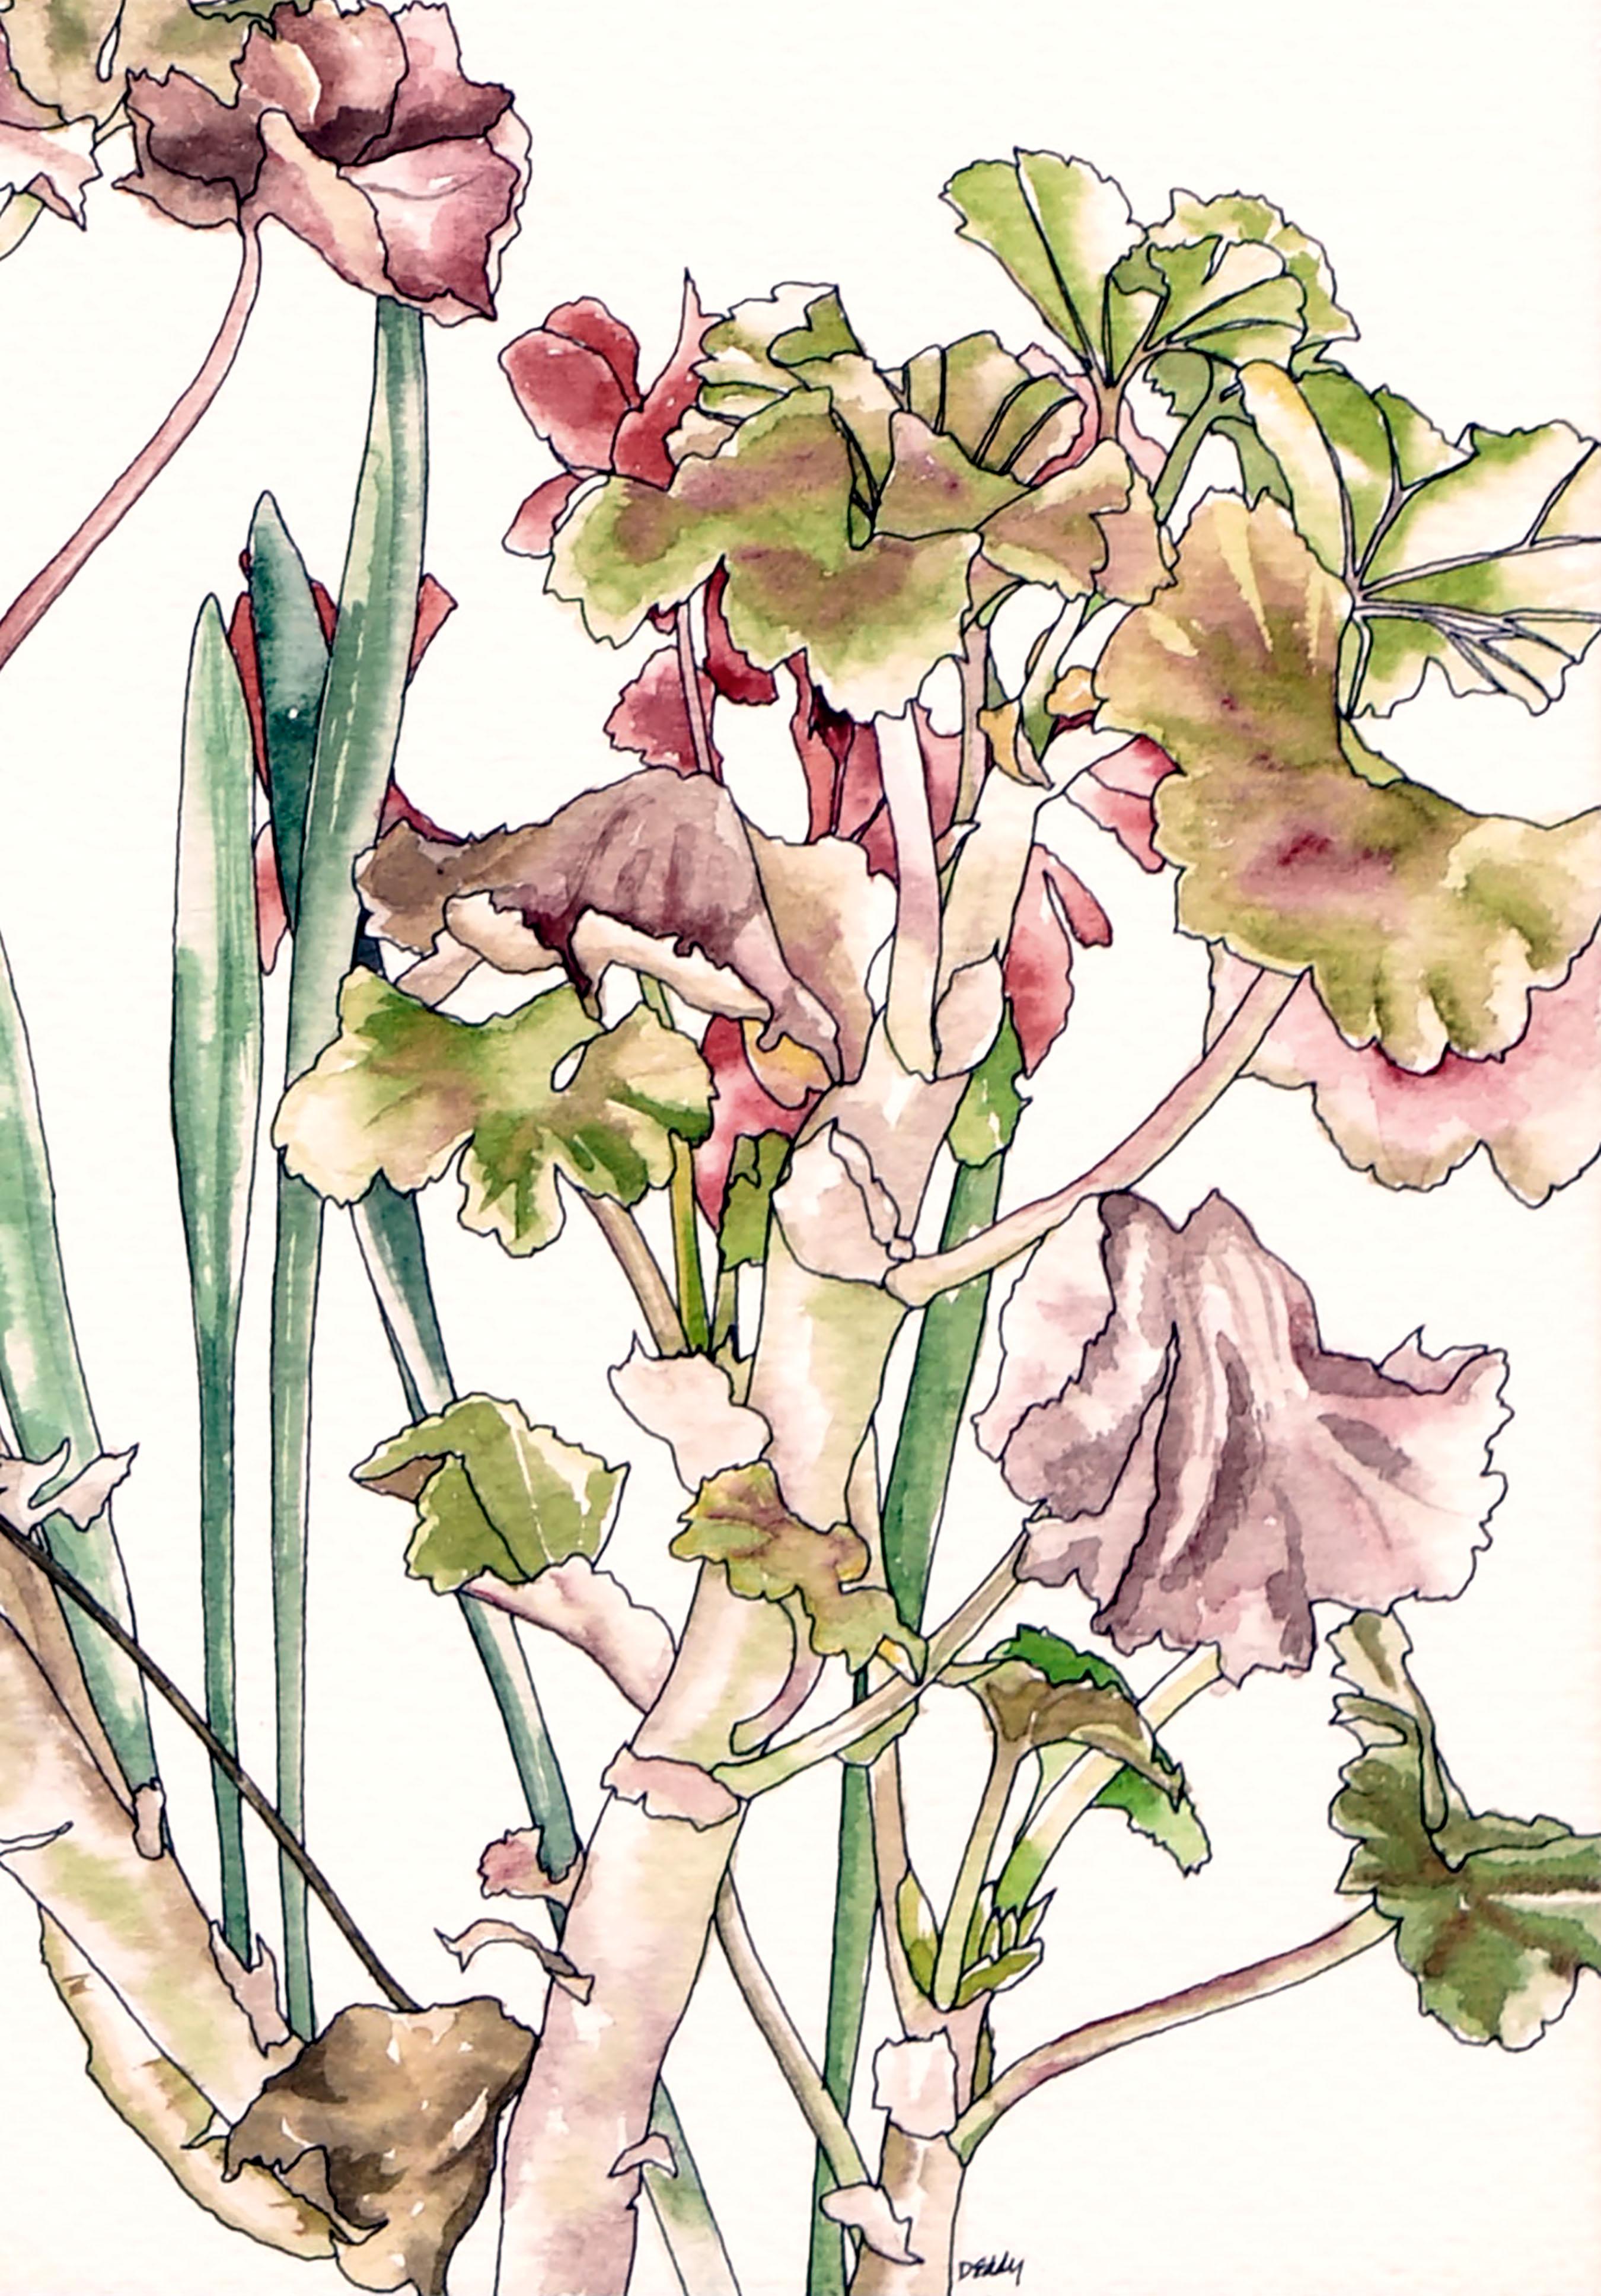 Geraniums & Bulbs - Botanical Study  - American Realist Art by Deborah Eddy